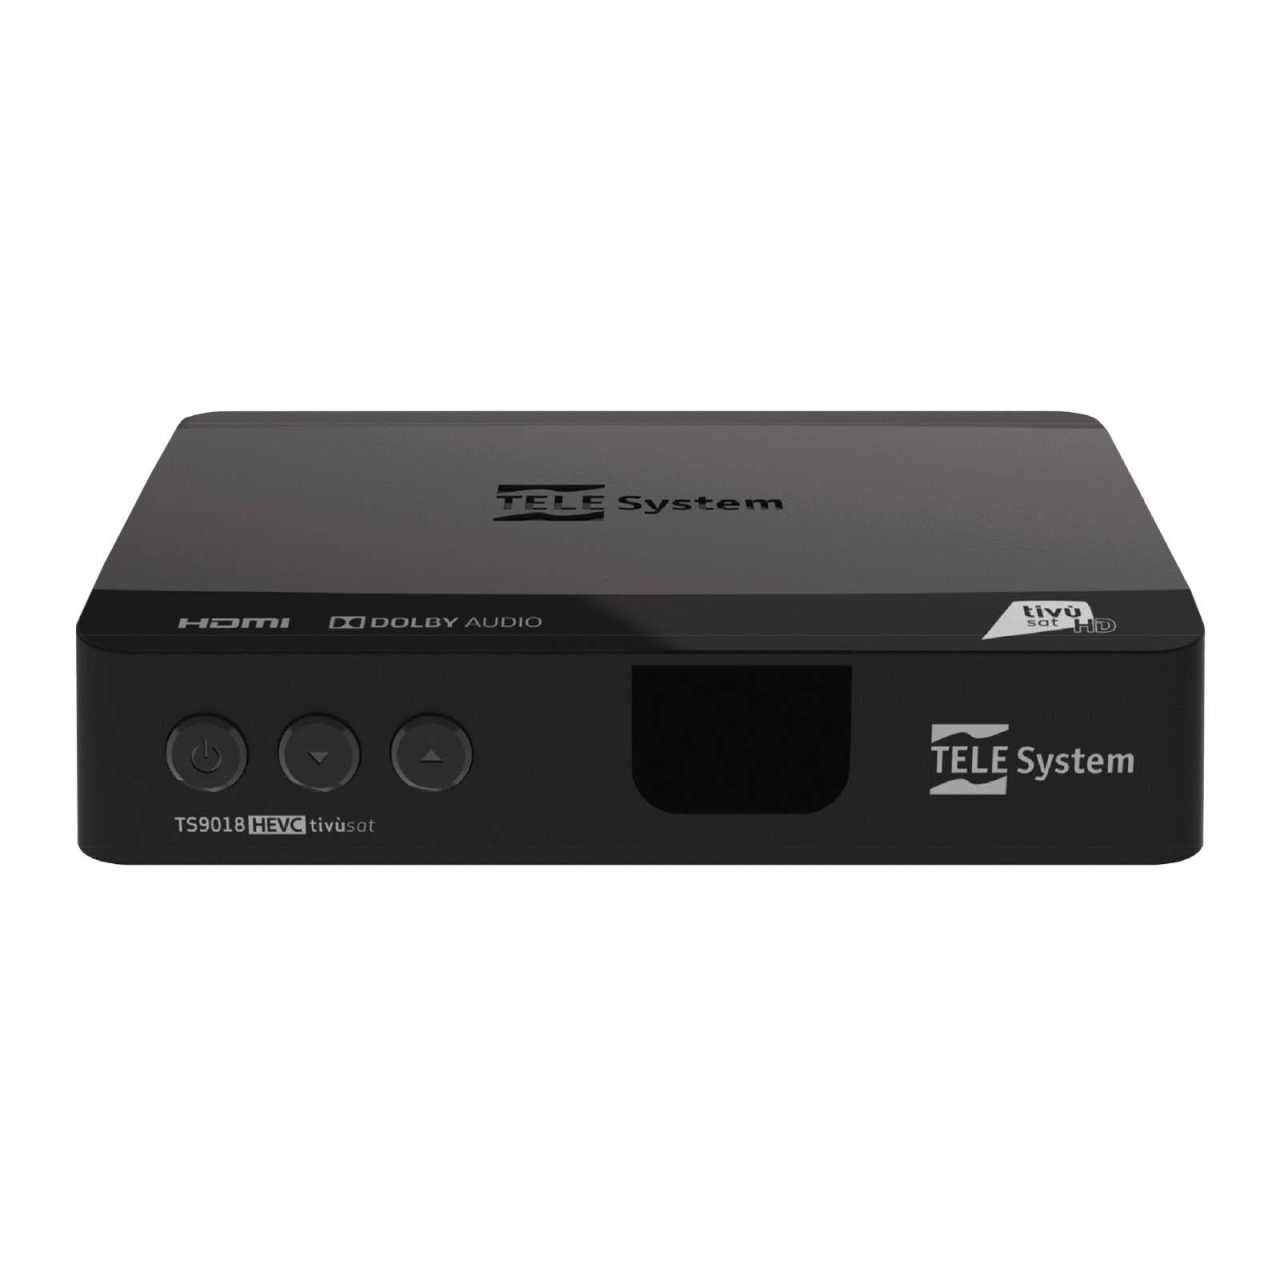 Telesystem TS9018 Full HD HEVC H.265 Smartcard HDMI DVB-S2 Sat Receiver mit Aktive Tivusat HD Karte von Telesystem